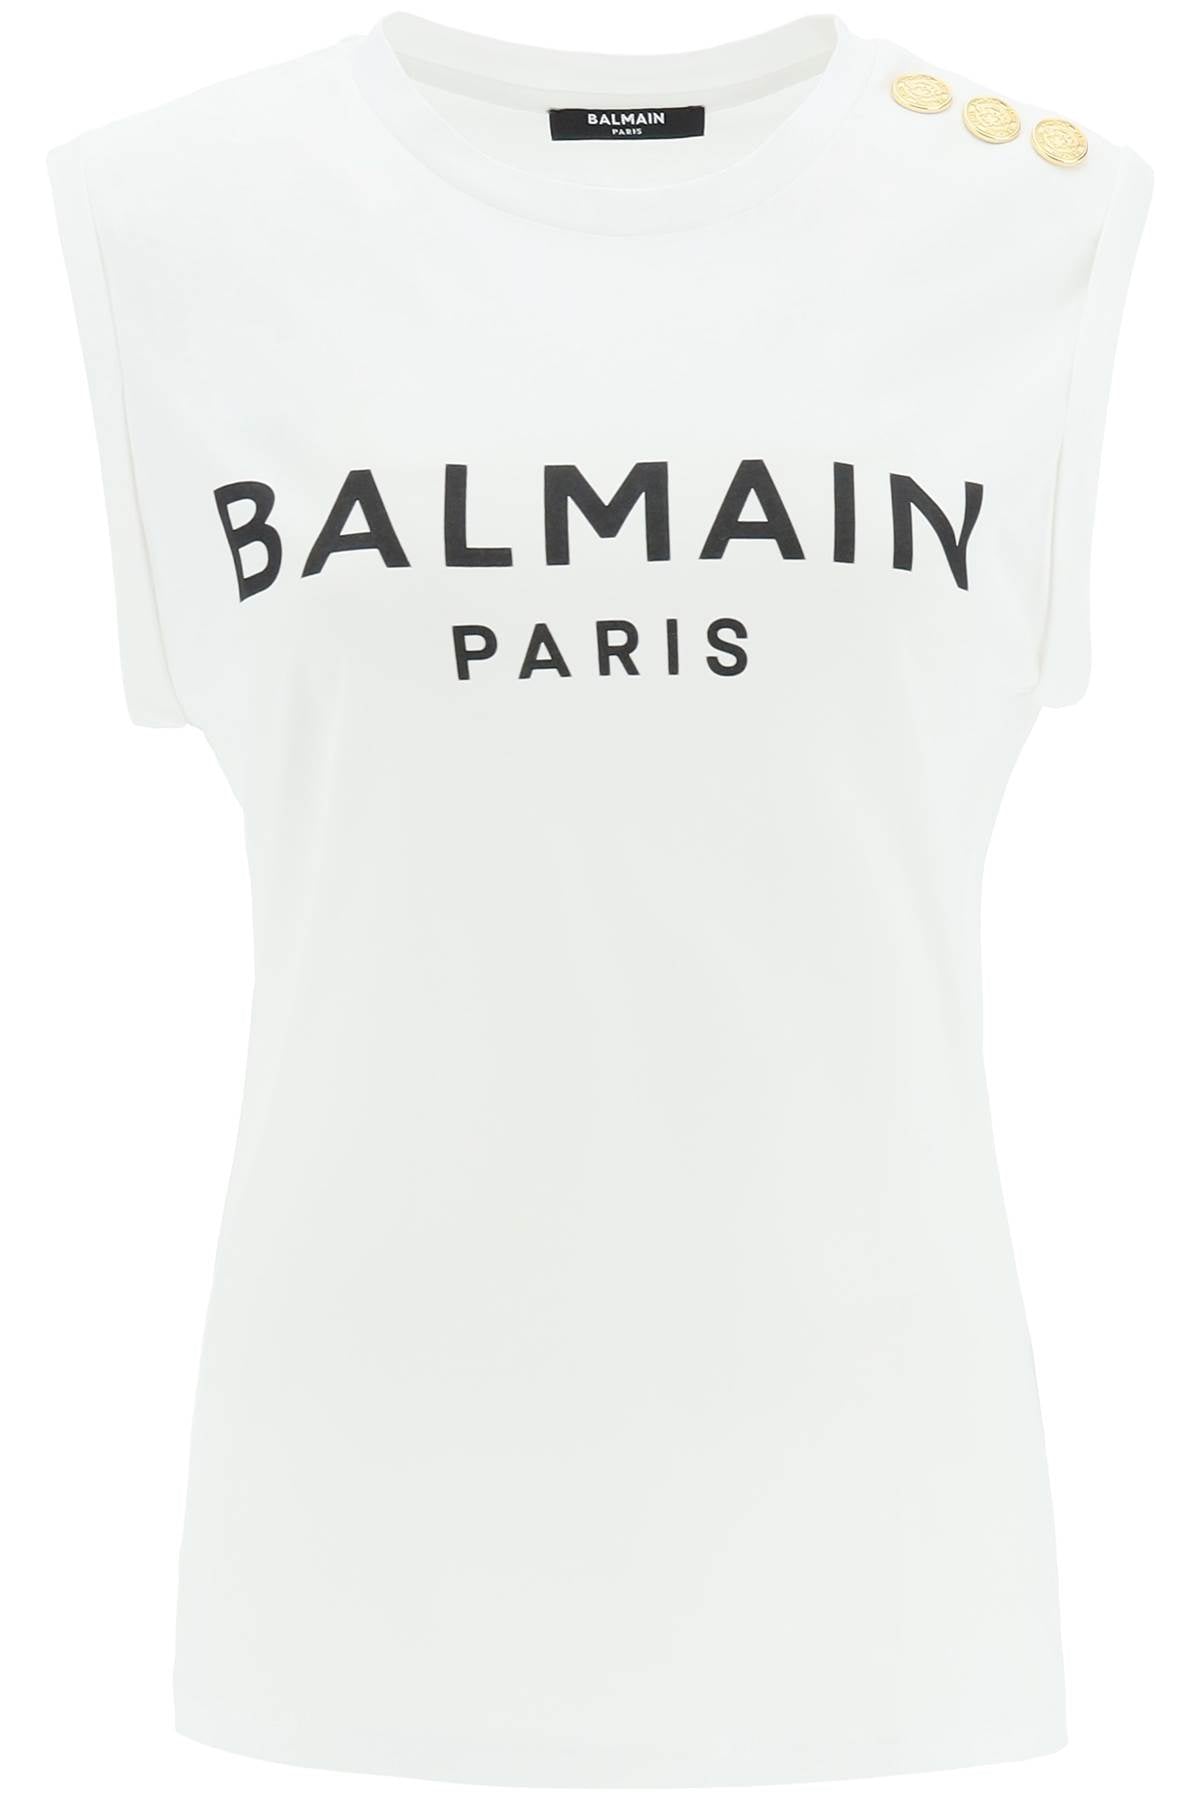 Balmain Logo Top With Buttons-Balmain-Urbanheer